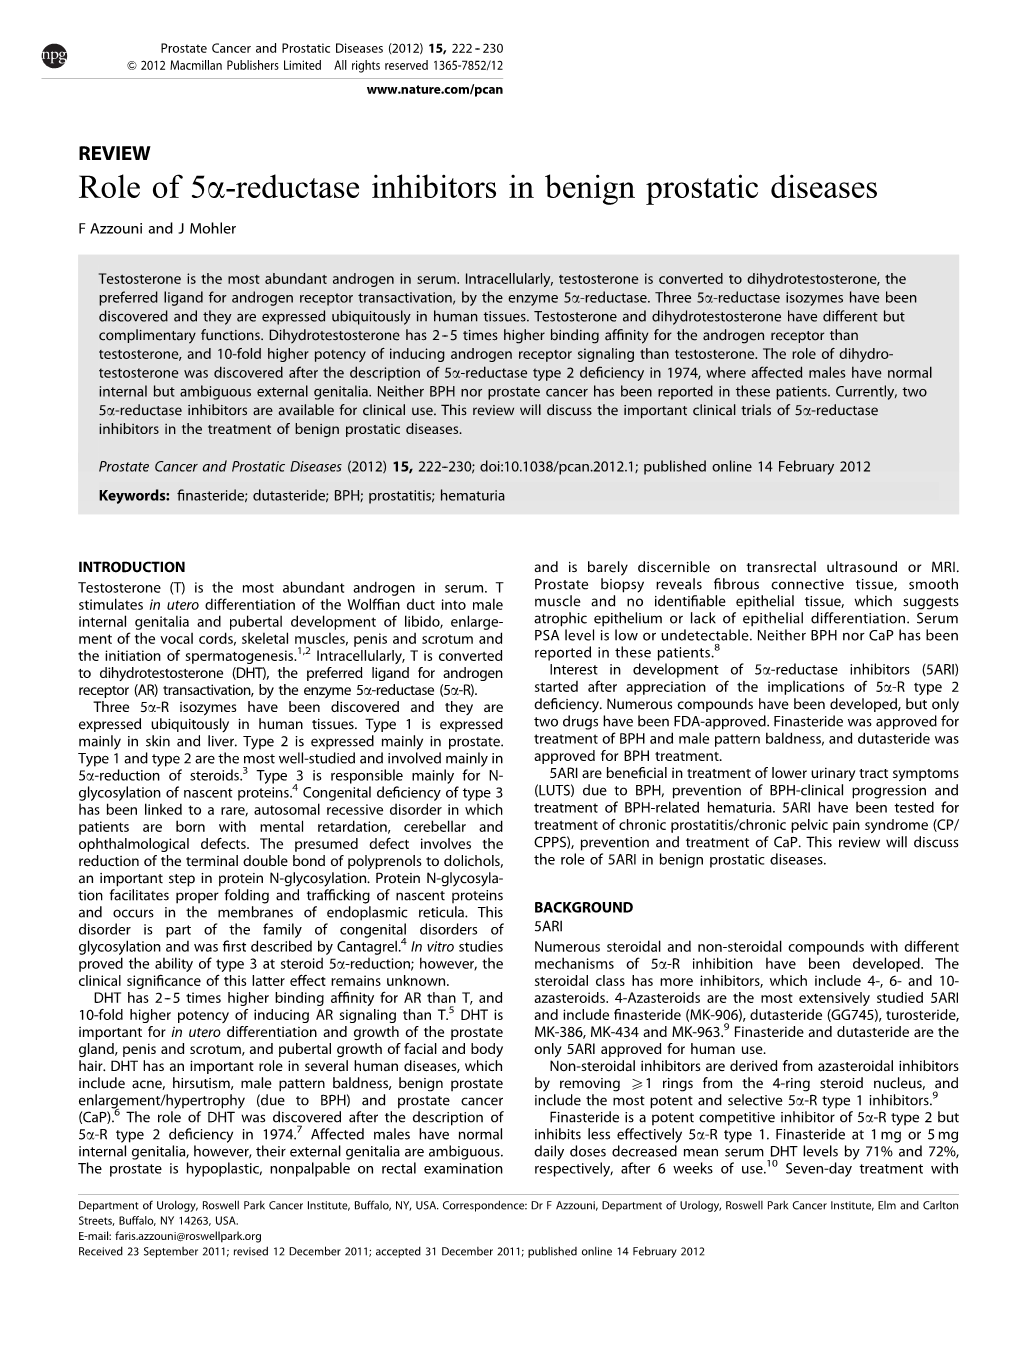 Role of 5Α-Reductase Inhibitors in Benign Prostatic Diseases